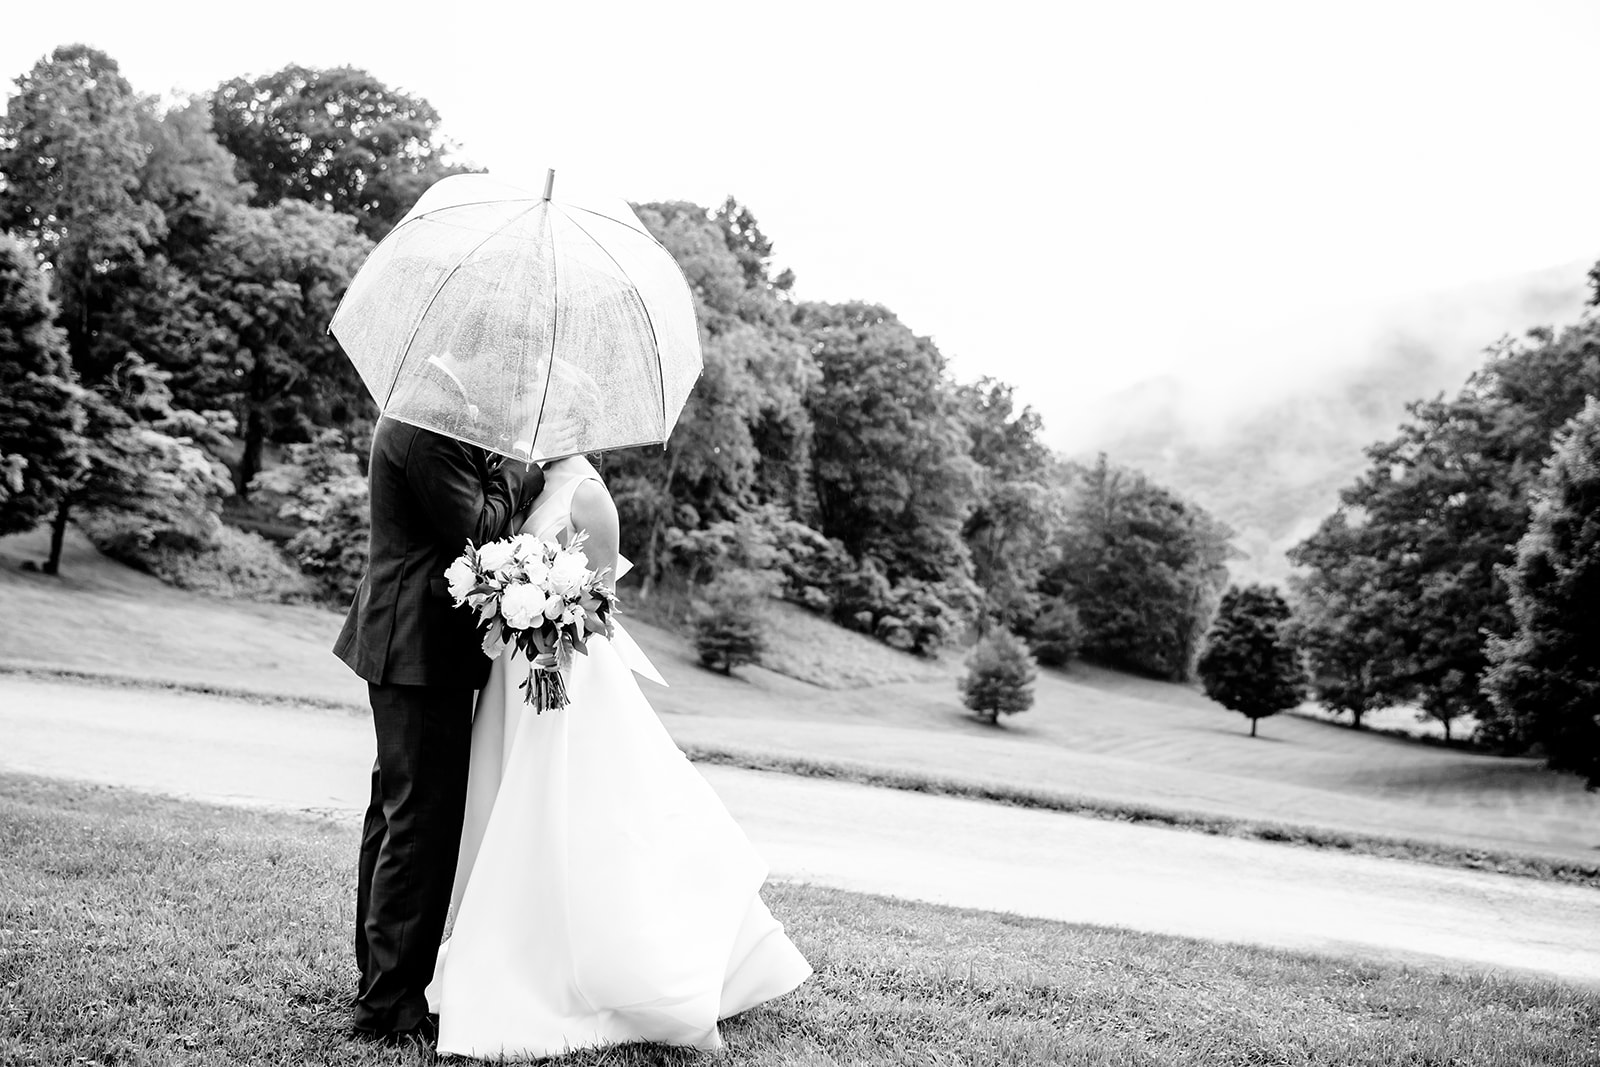 Beth  Devins Misty Mountain Wedding - Image Property of www.j-dphoto.com